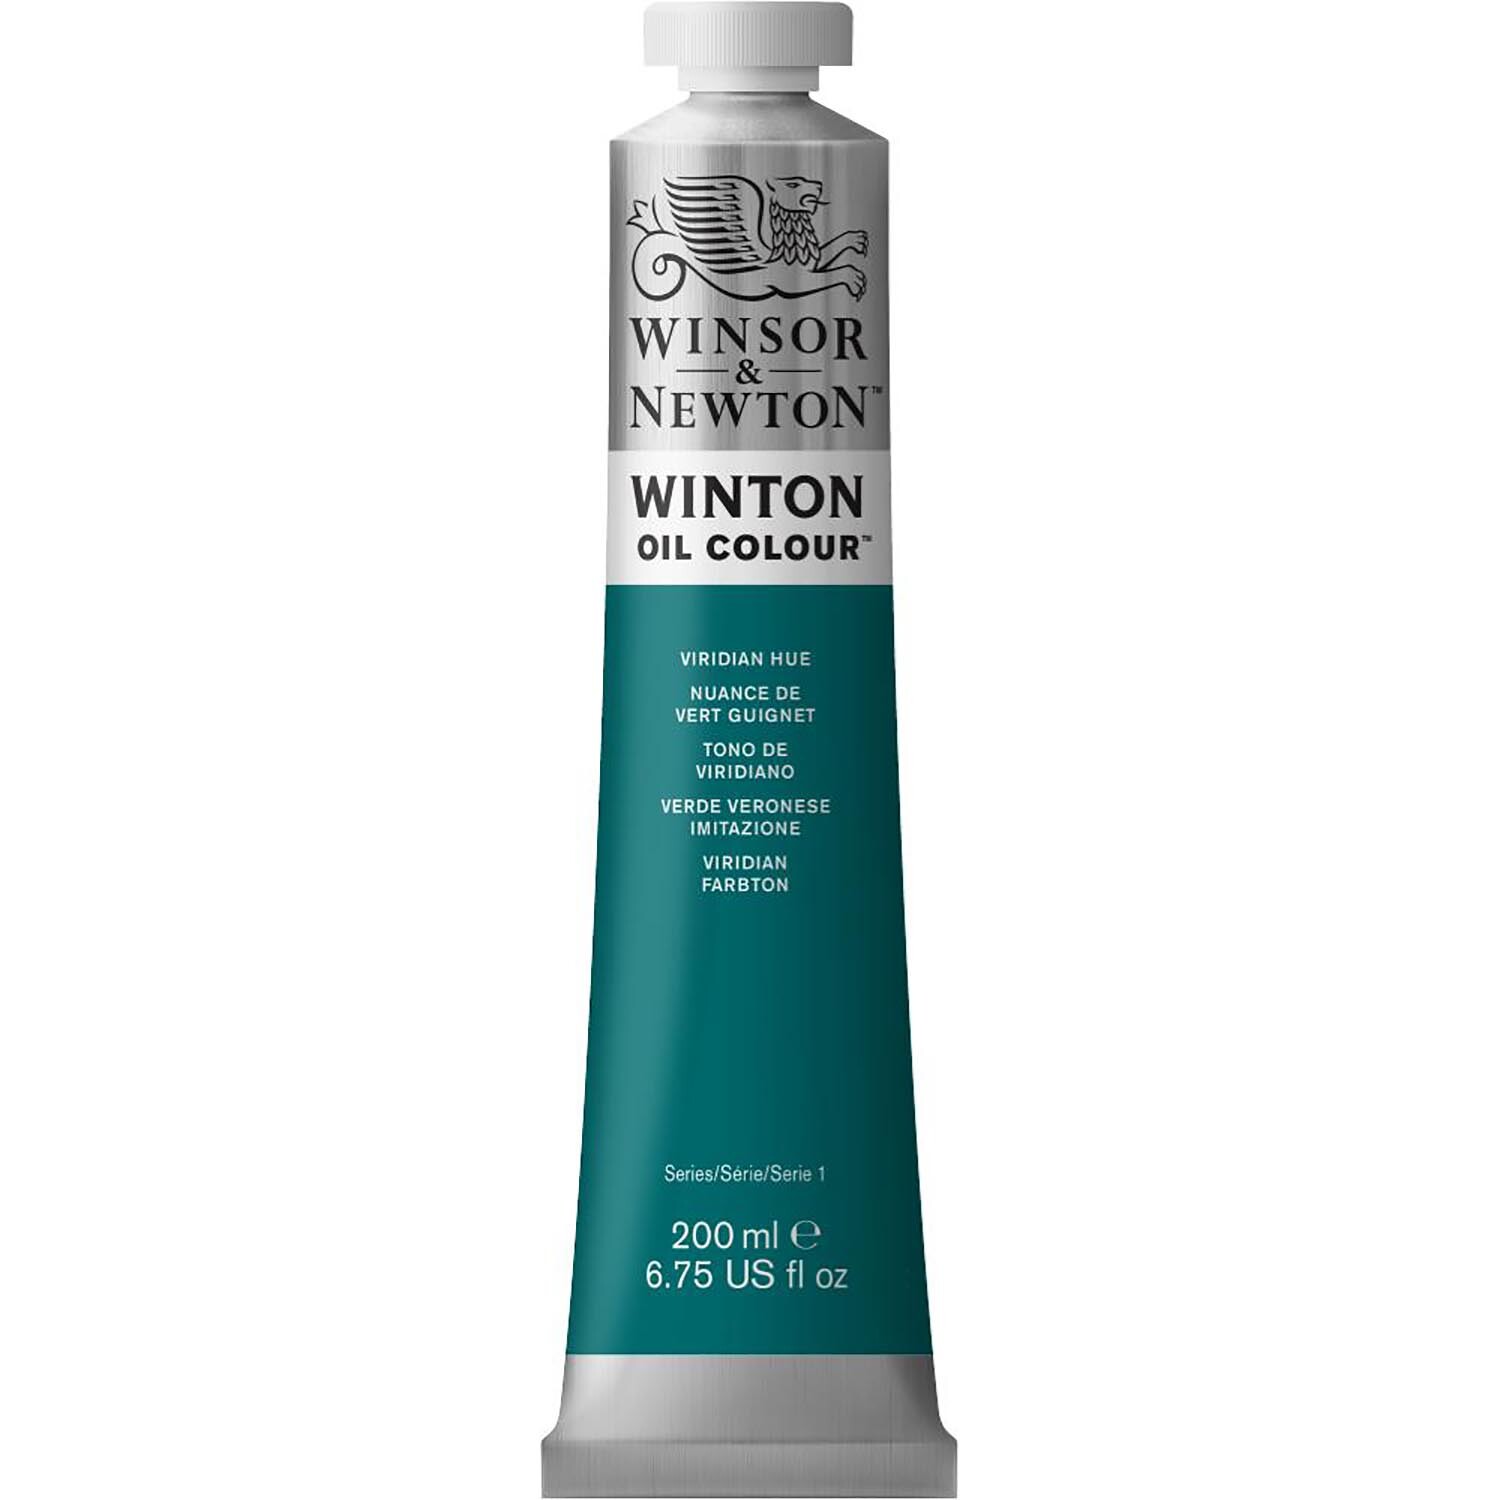 Winsor and Newton 200ml Winton Oil Colours - Viridian Hue Image